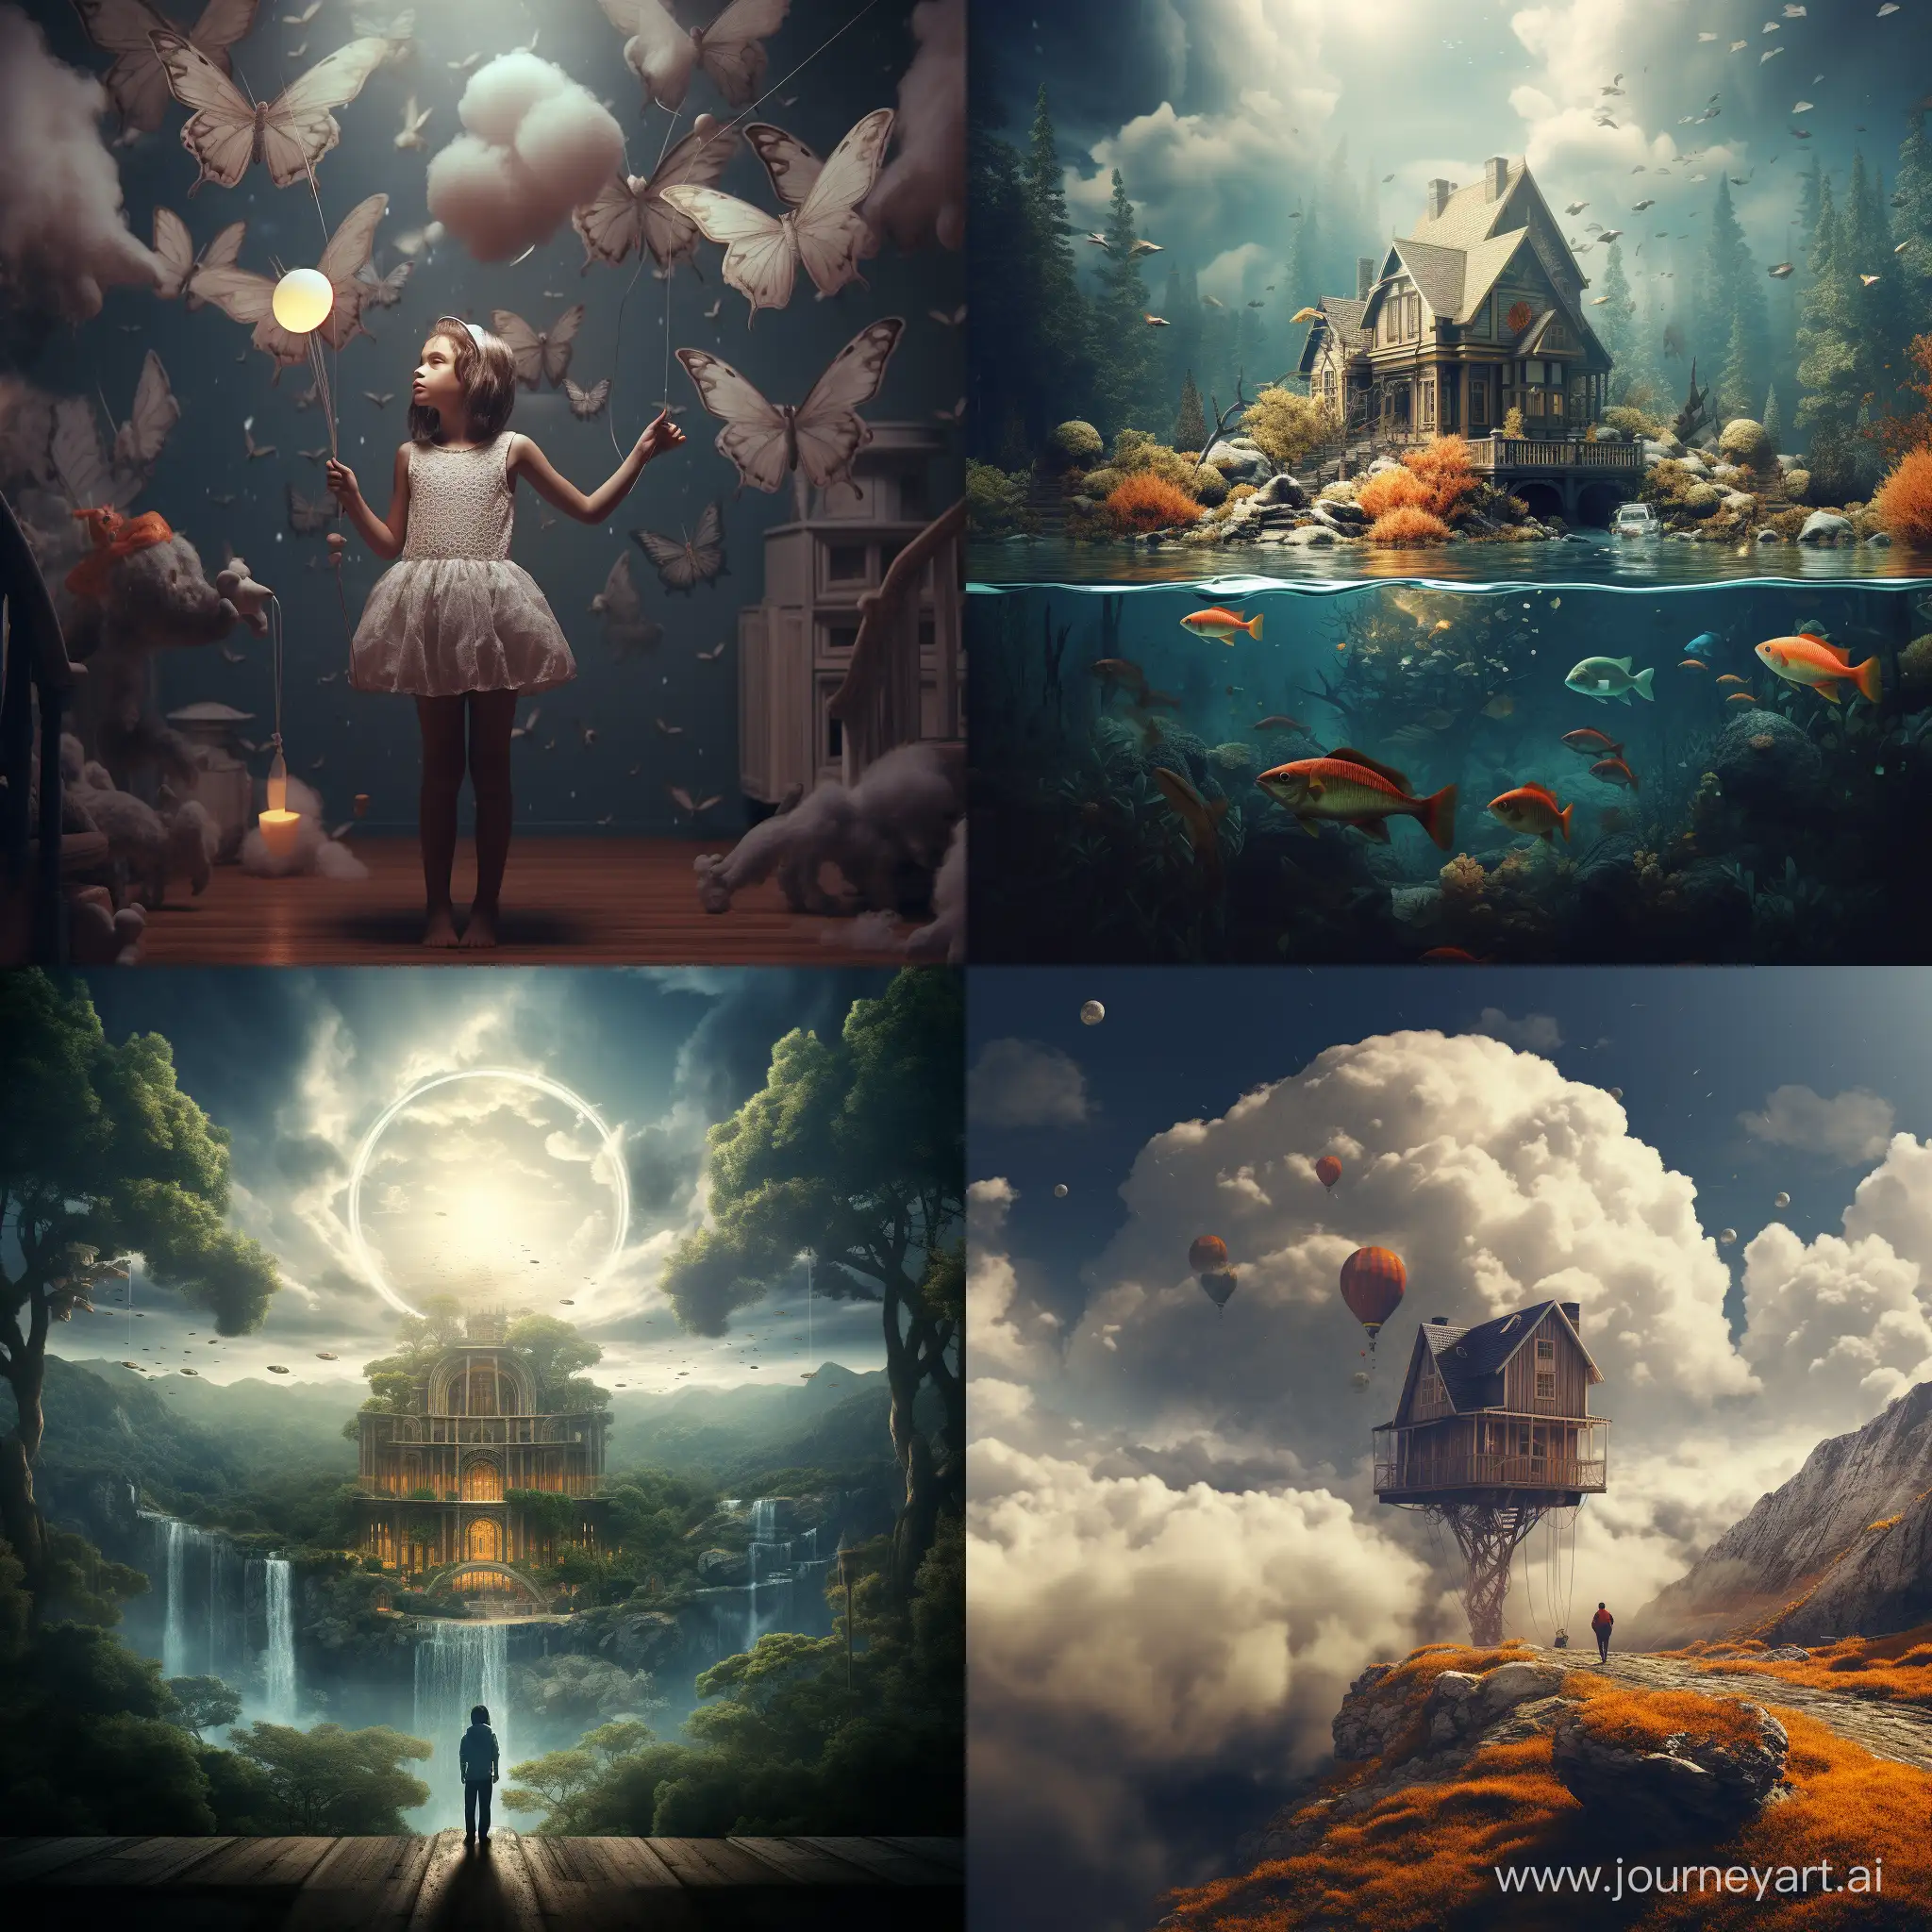 Creative-Fantasy-Art-Enchanting-Forest-Adventure